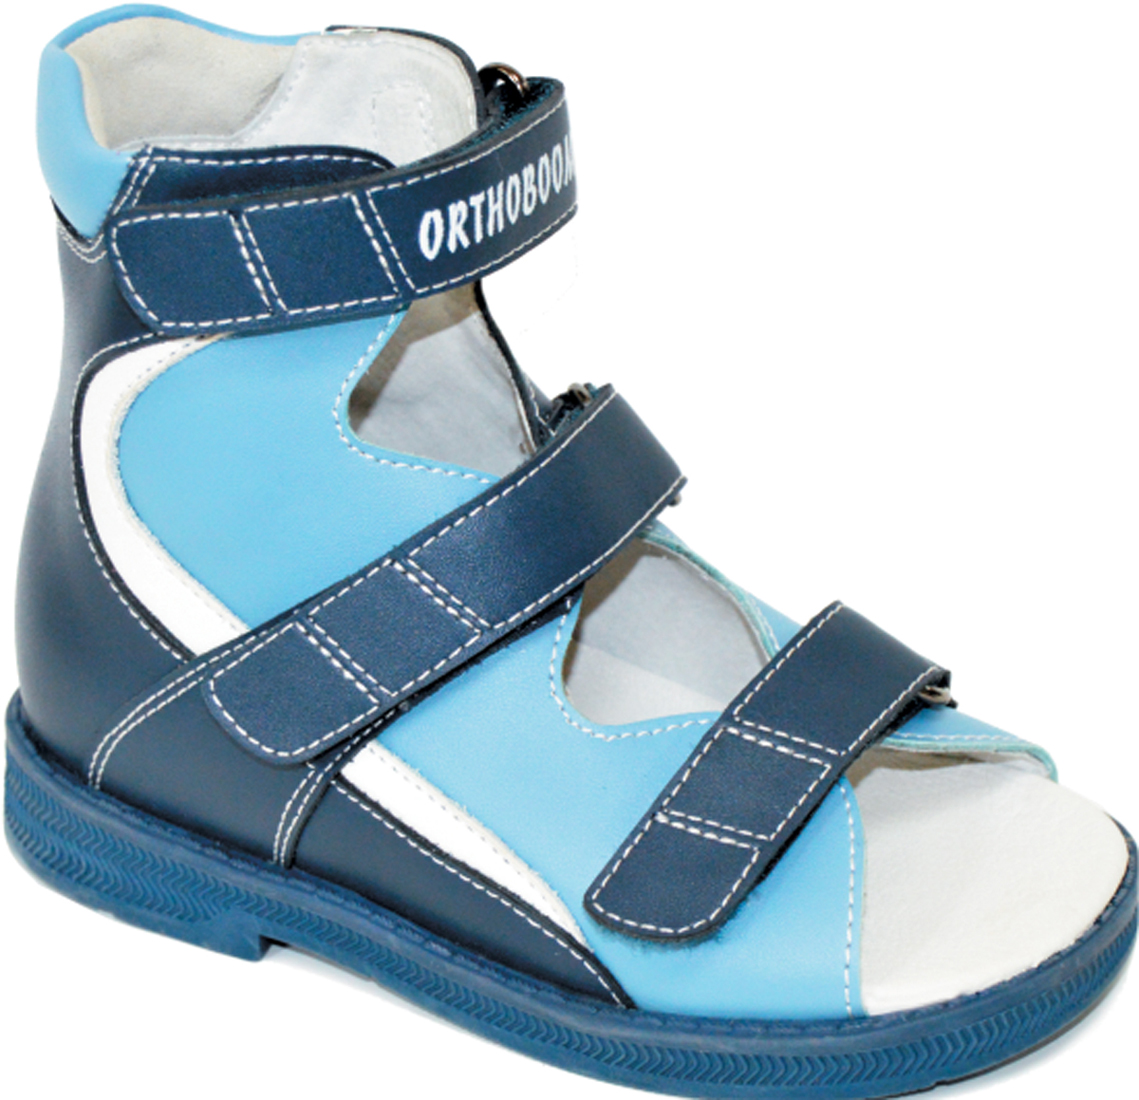 Сандалии для мальчика Orthoboom, цвет: темно-синий-голубой-белый. 71597-33. Размер 24